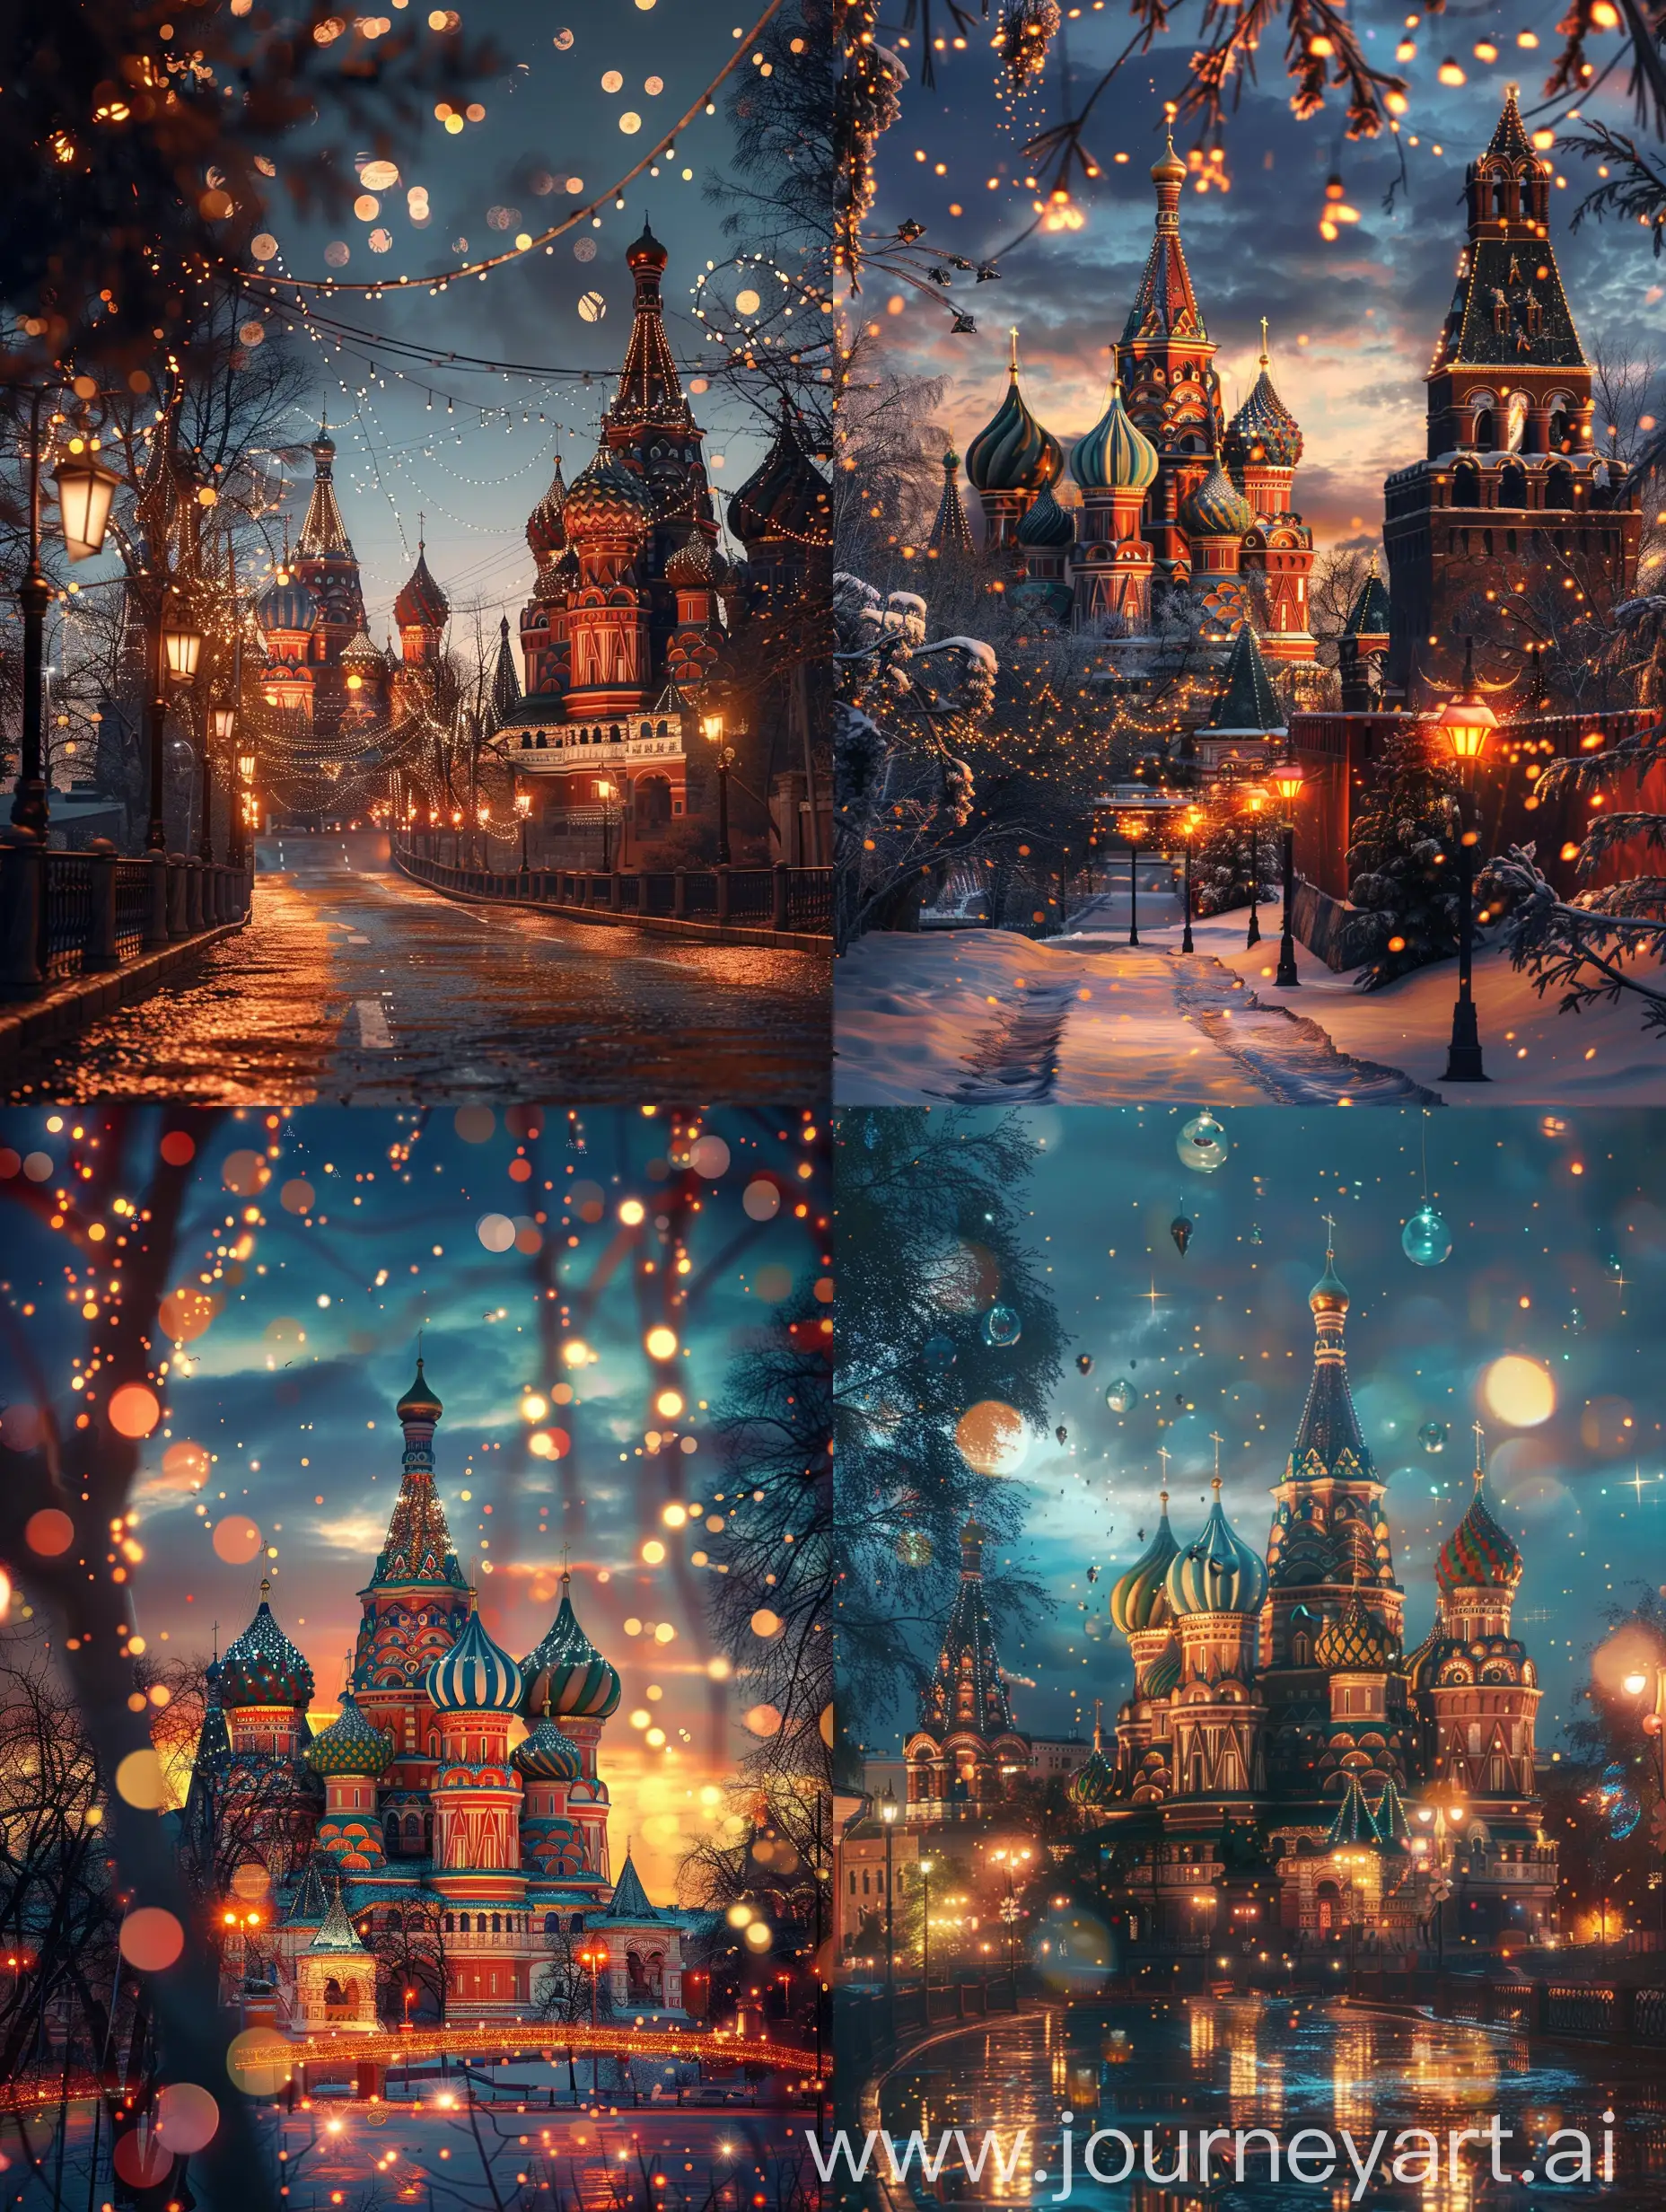 Russian fairytale the most classical image, future Moscow entourage, twilights, lights, magic atmoshpere, future, ultarealistic photos, 4k, cinematic